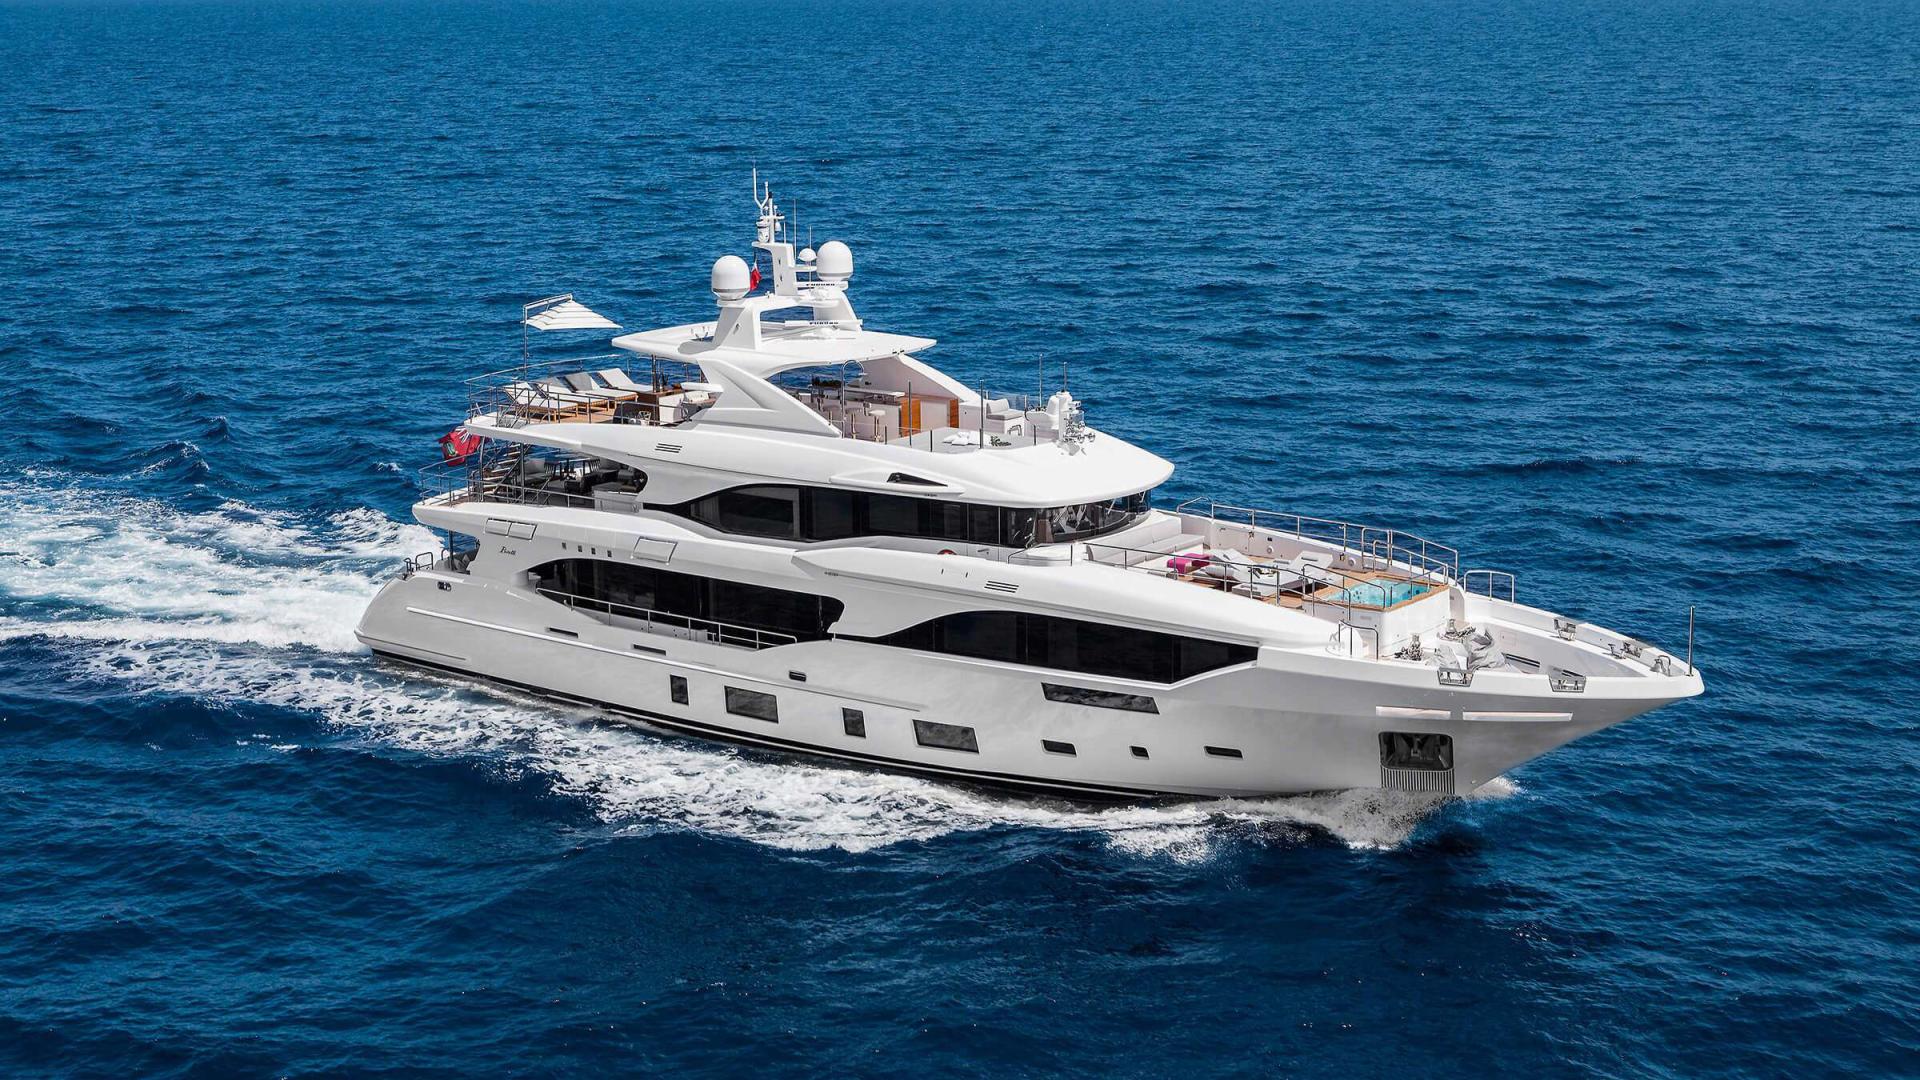 SeaNet sold 22% of the Benetti Mediterraneo 116, 35m tri-deck yacht